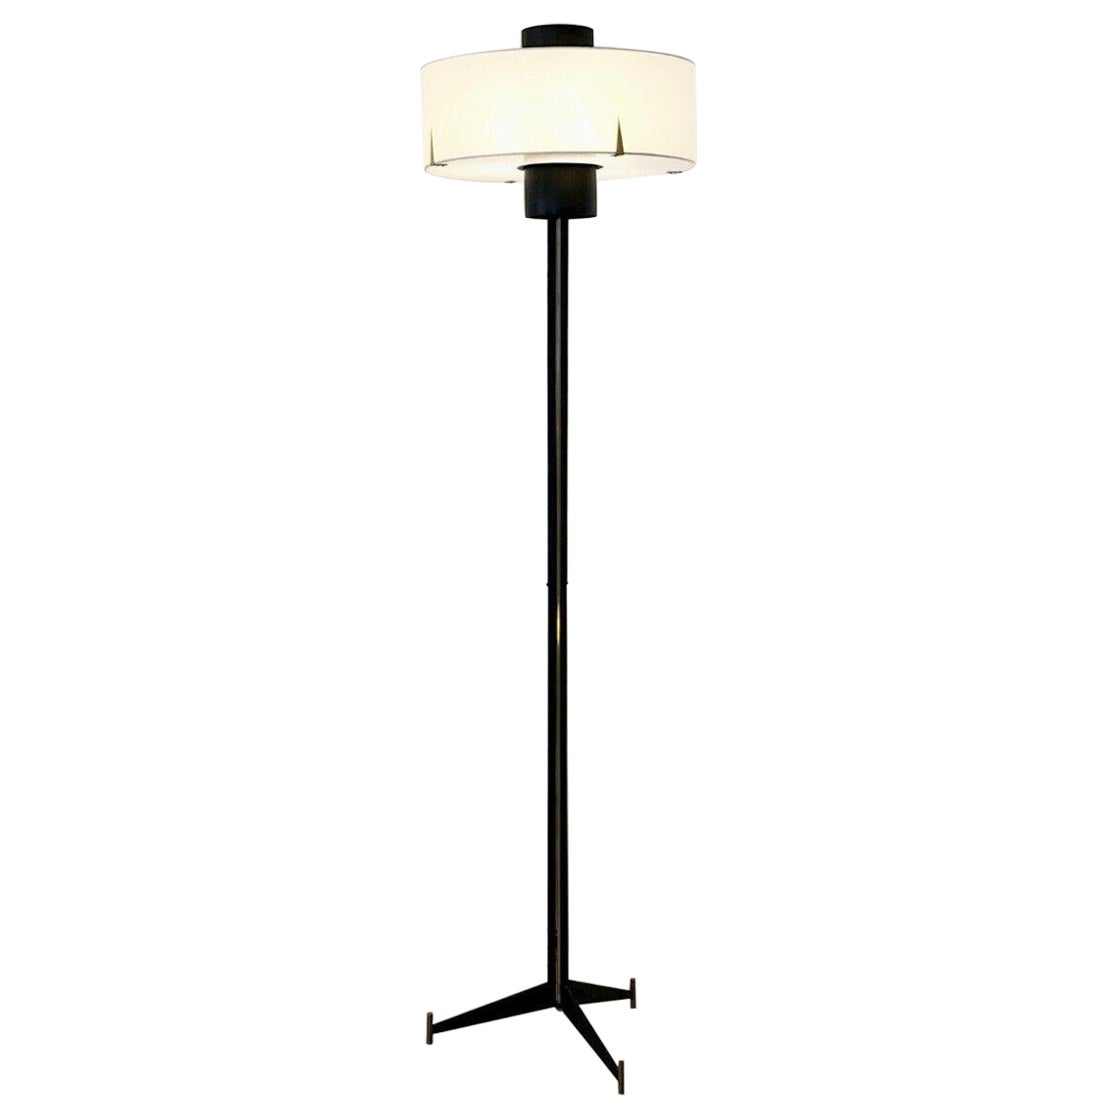 A MID-CENTURY-MODERN MODERNIST Tripod FLOOR LAMP by MAISON ARLUS, France 1950 For Sale